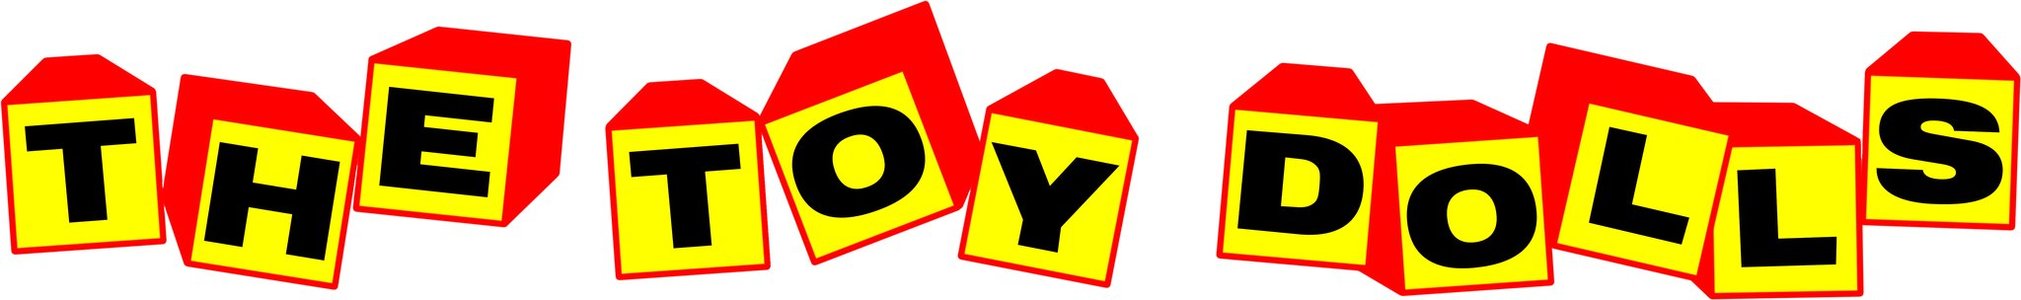 Logo The Toy Dolls